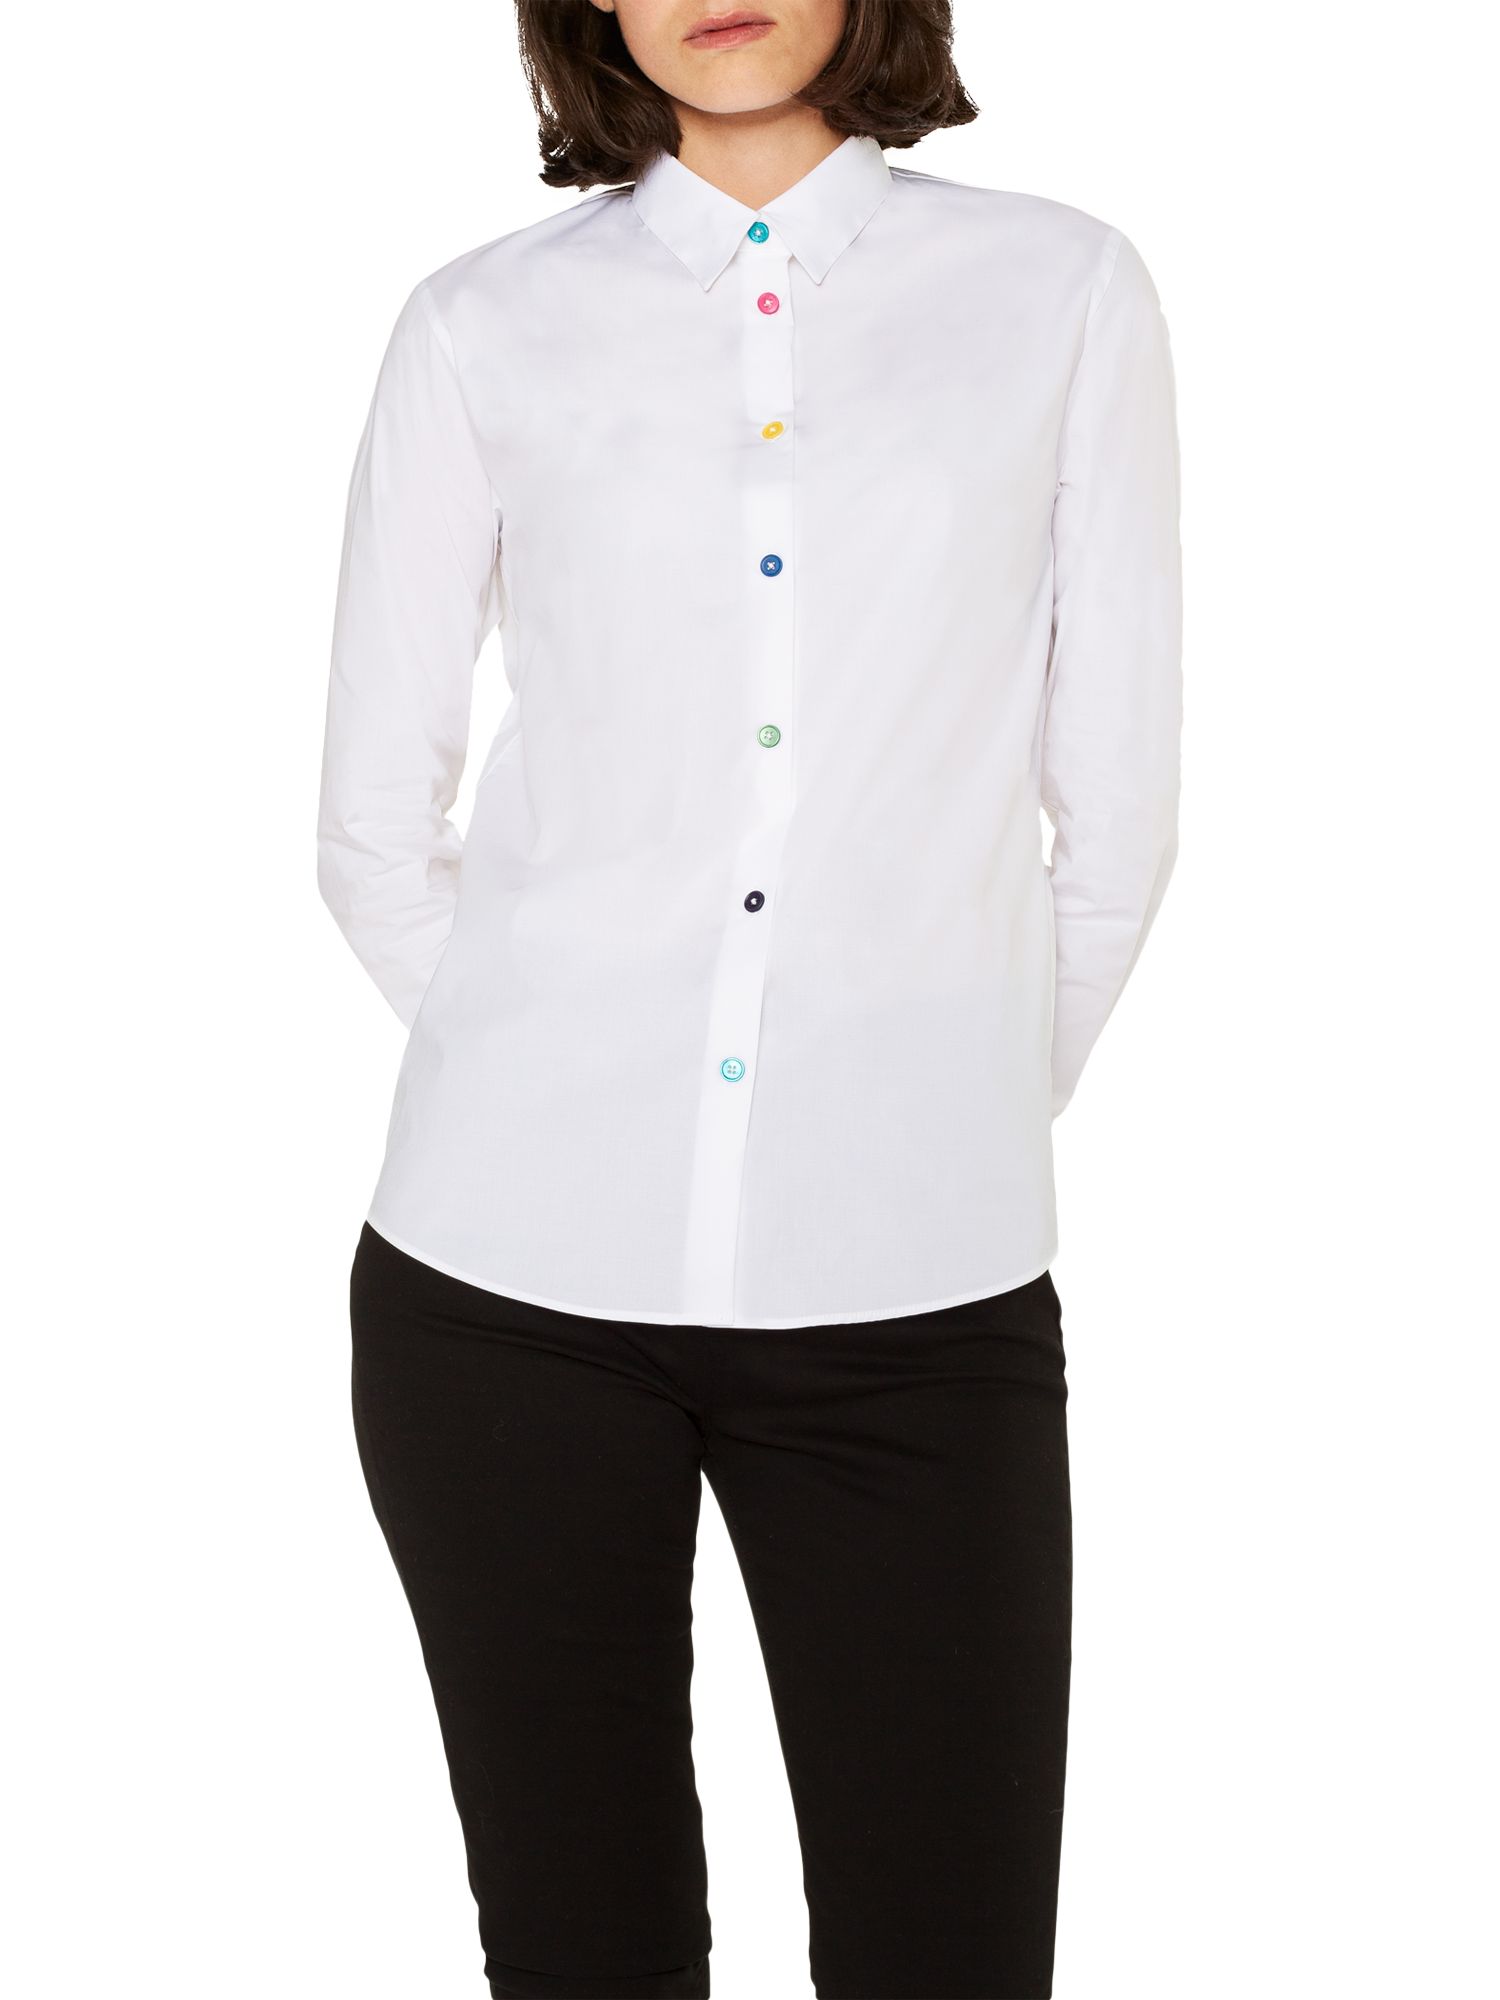 PS Paul Smith Multi Colour Button Placket Shirt, White/Multi